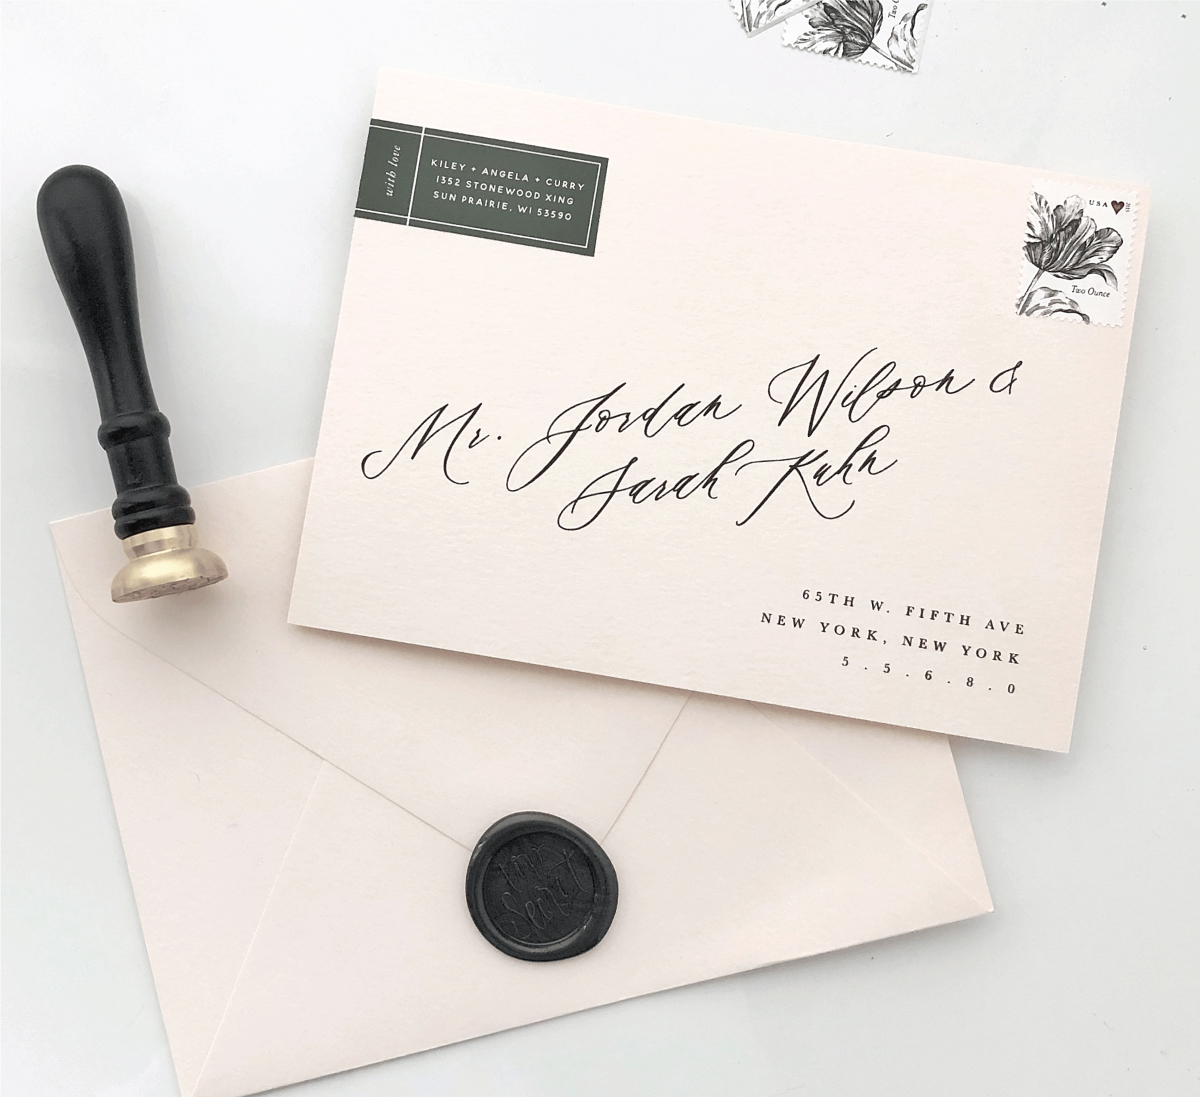 Custom Envelope Seal Design and Printing Tips